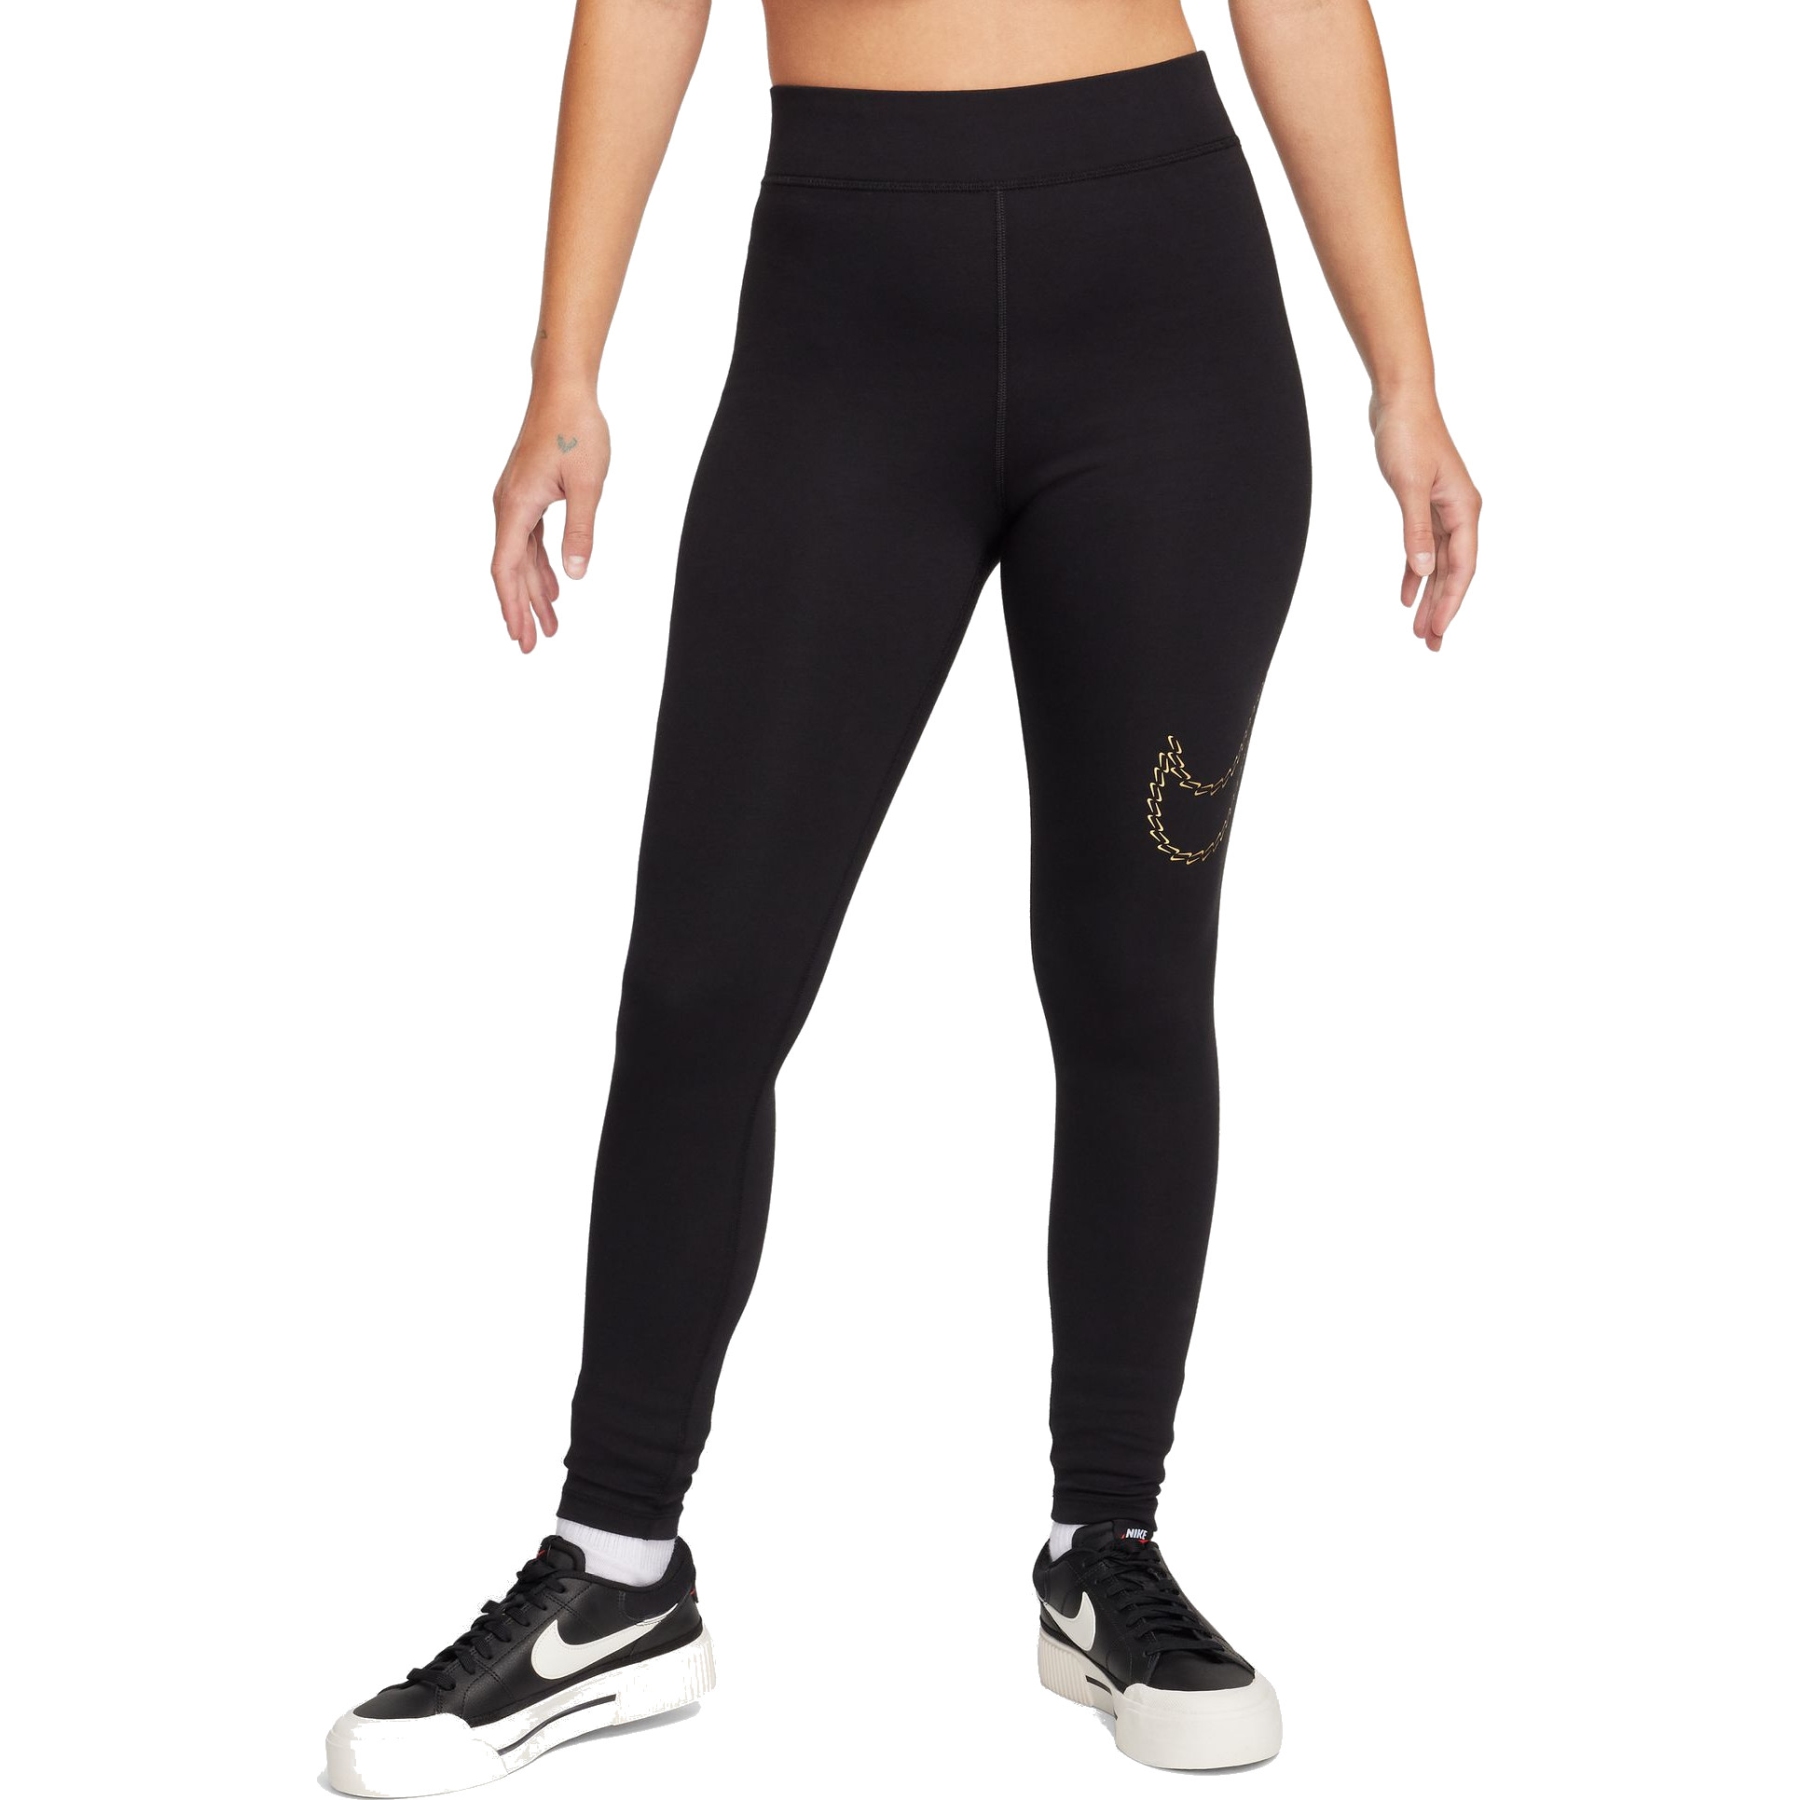 https://images.bike24.com/i/mb/95/6e/2c/nike-sportswear-premium-essentials-tights-women-black-fb8766-010-5-1594338.jpg